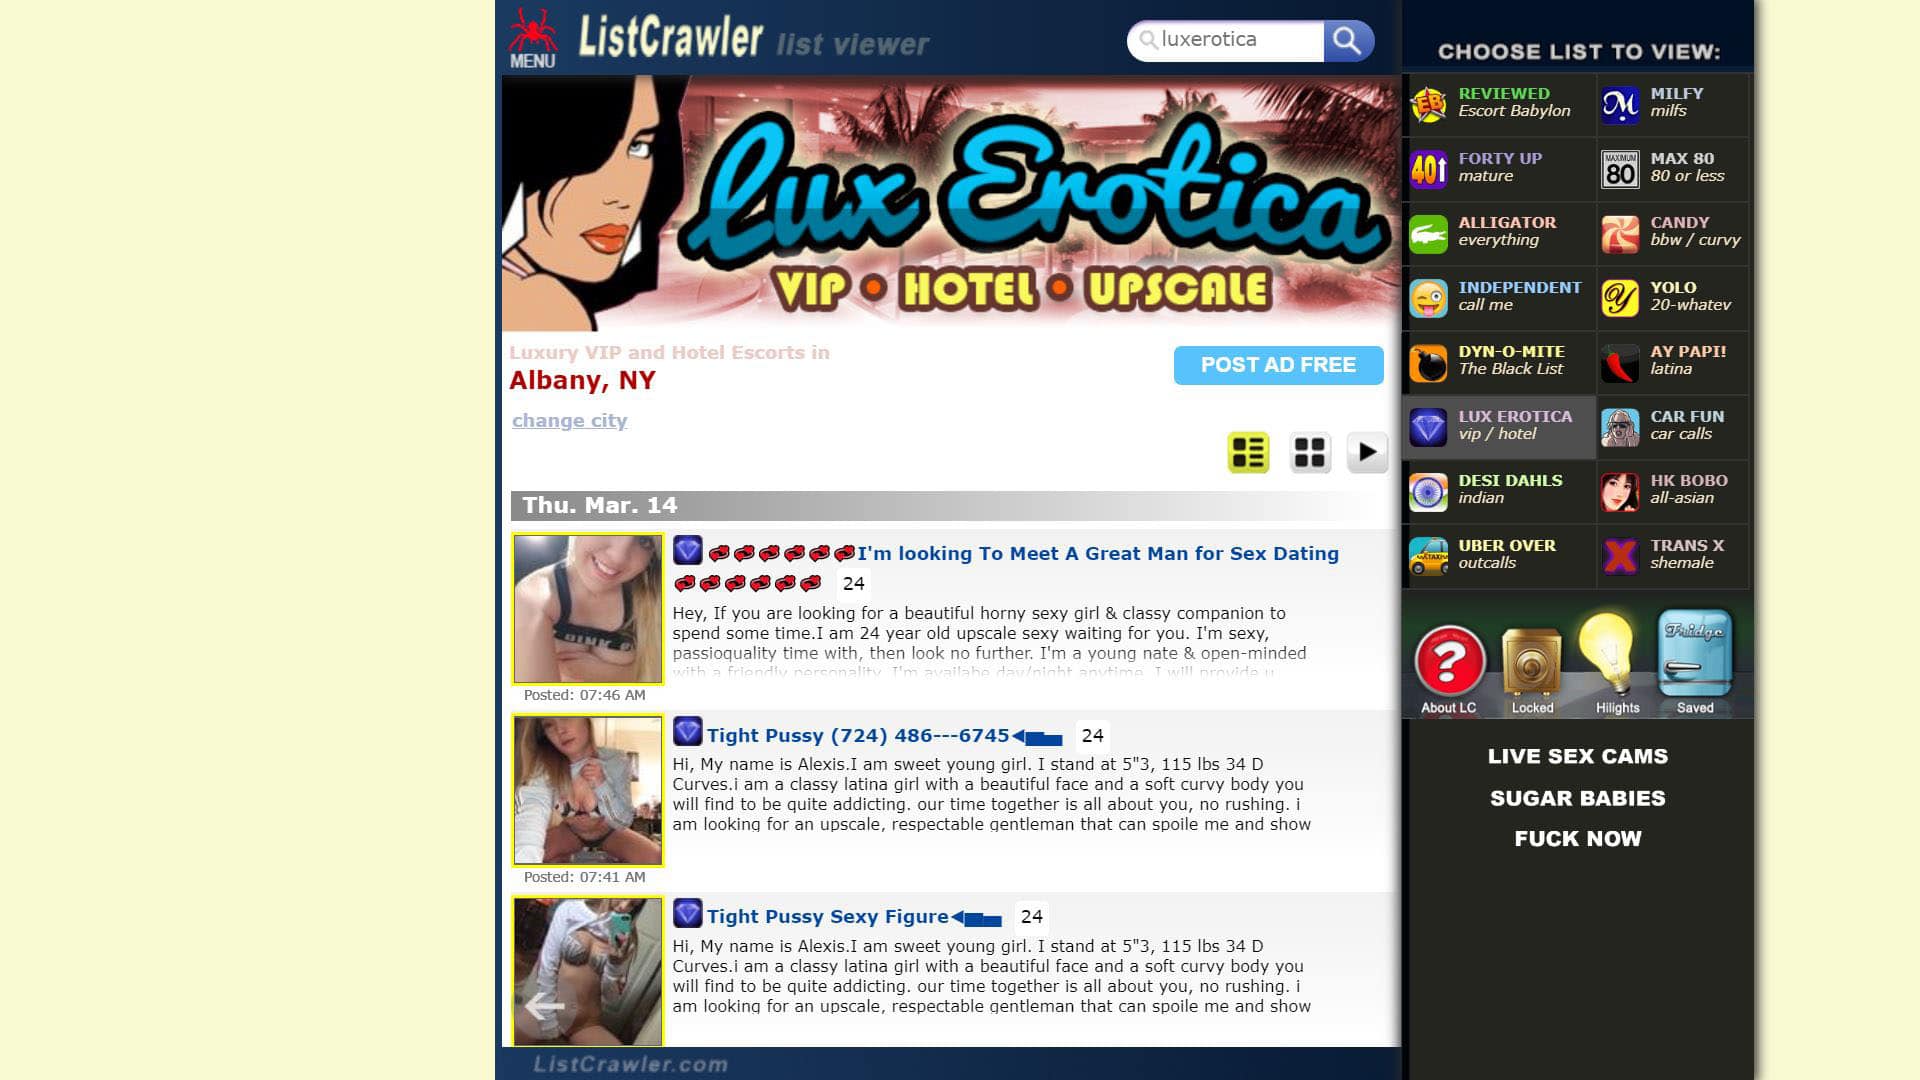 Listcrawlers dating site